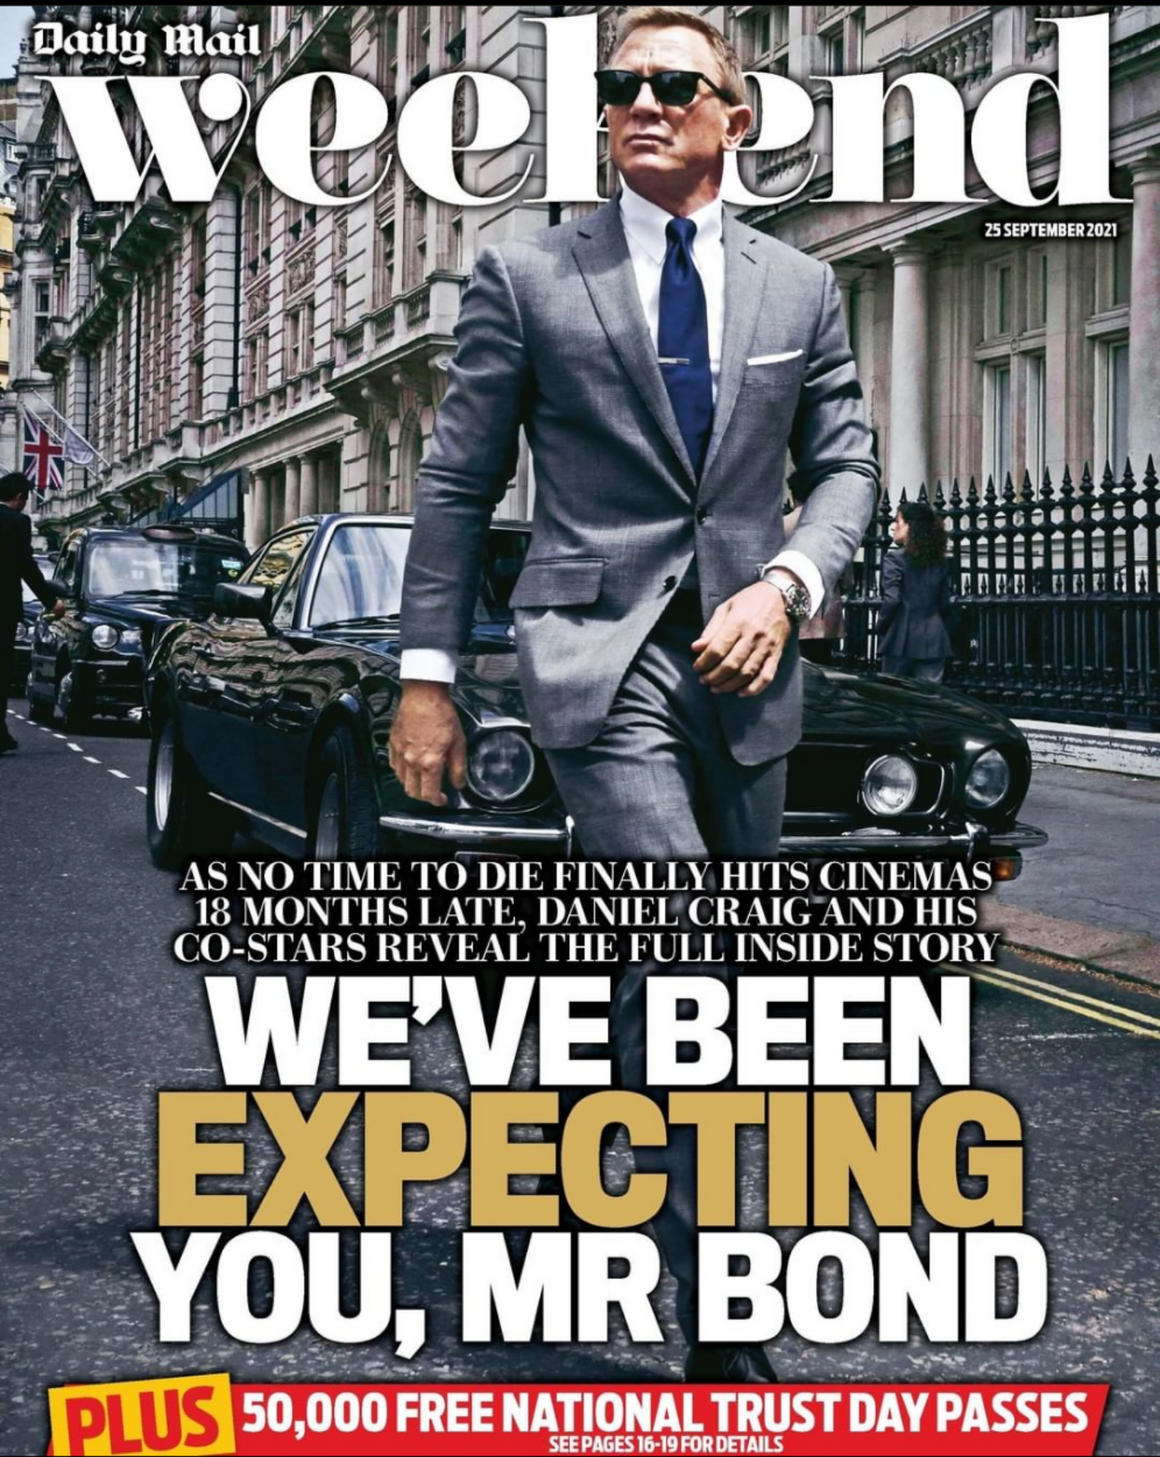 JAMES BOND No Time To Die Daniel Craig Rami Malek UK WEEKEND Magazine 25 September 2021 (defective copy)